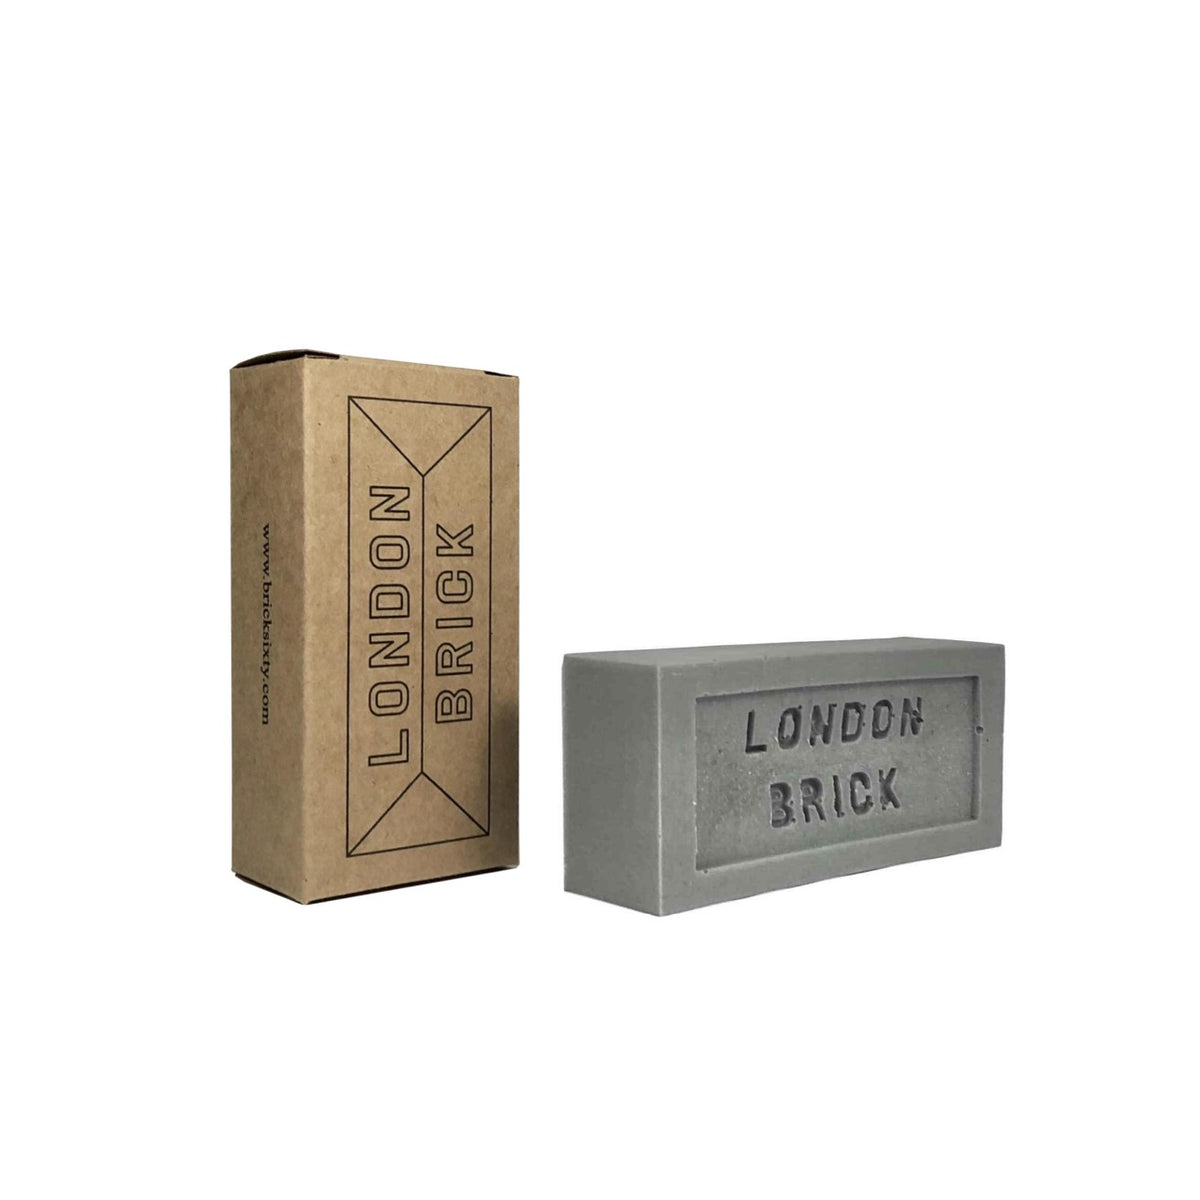 Brick Sixty London Soap - Fly Ash